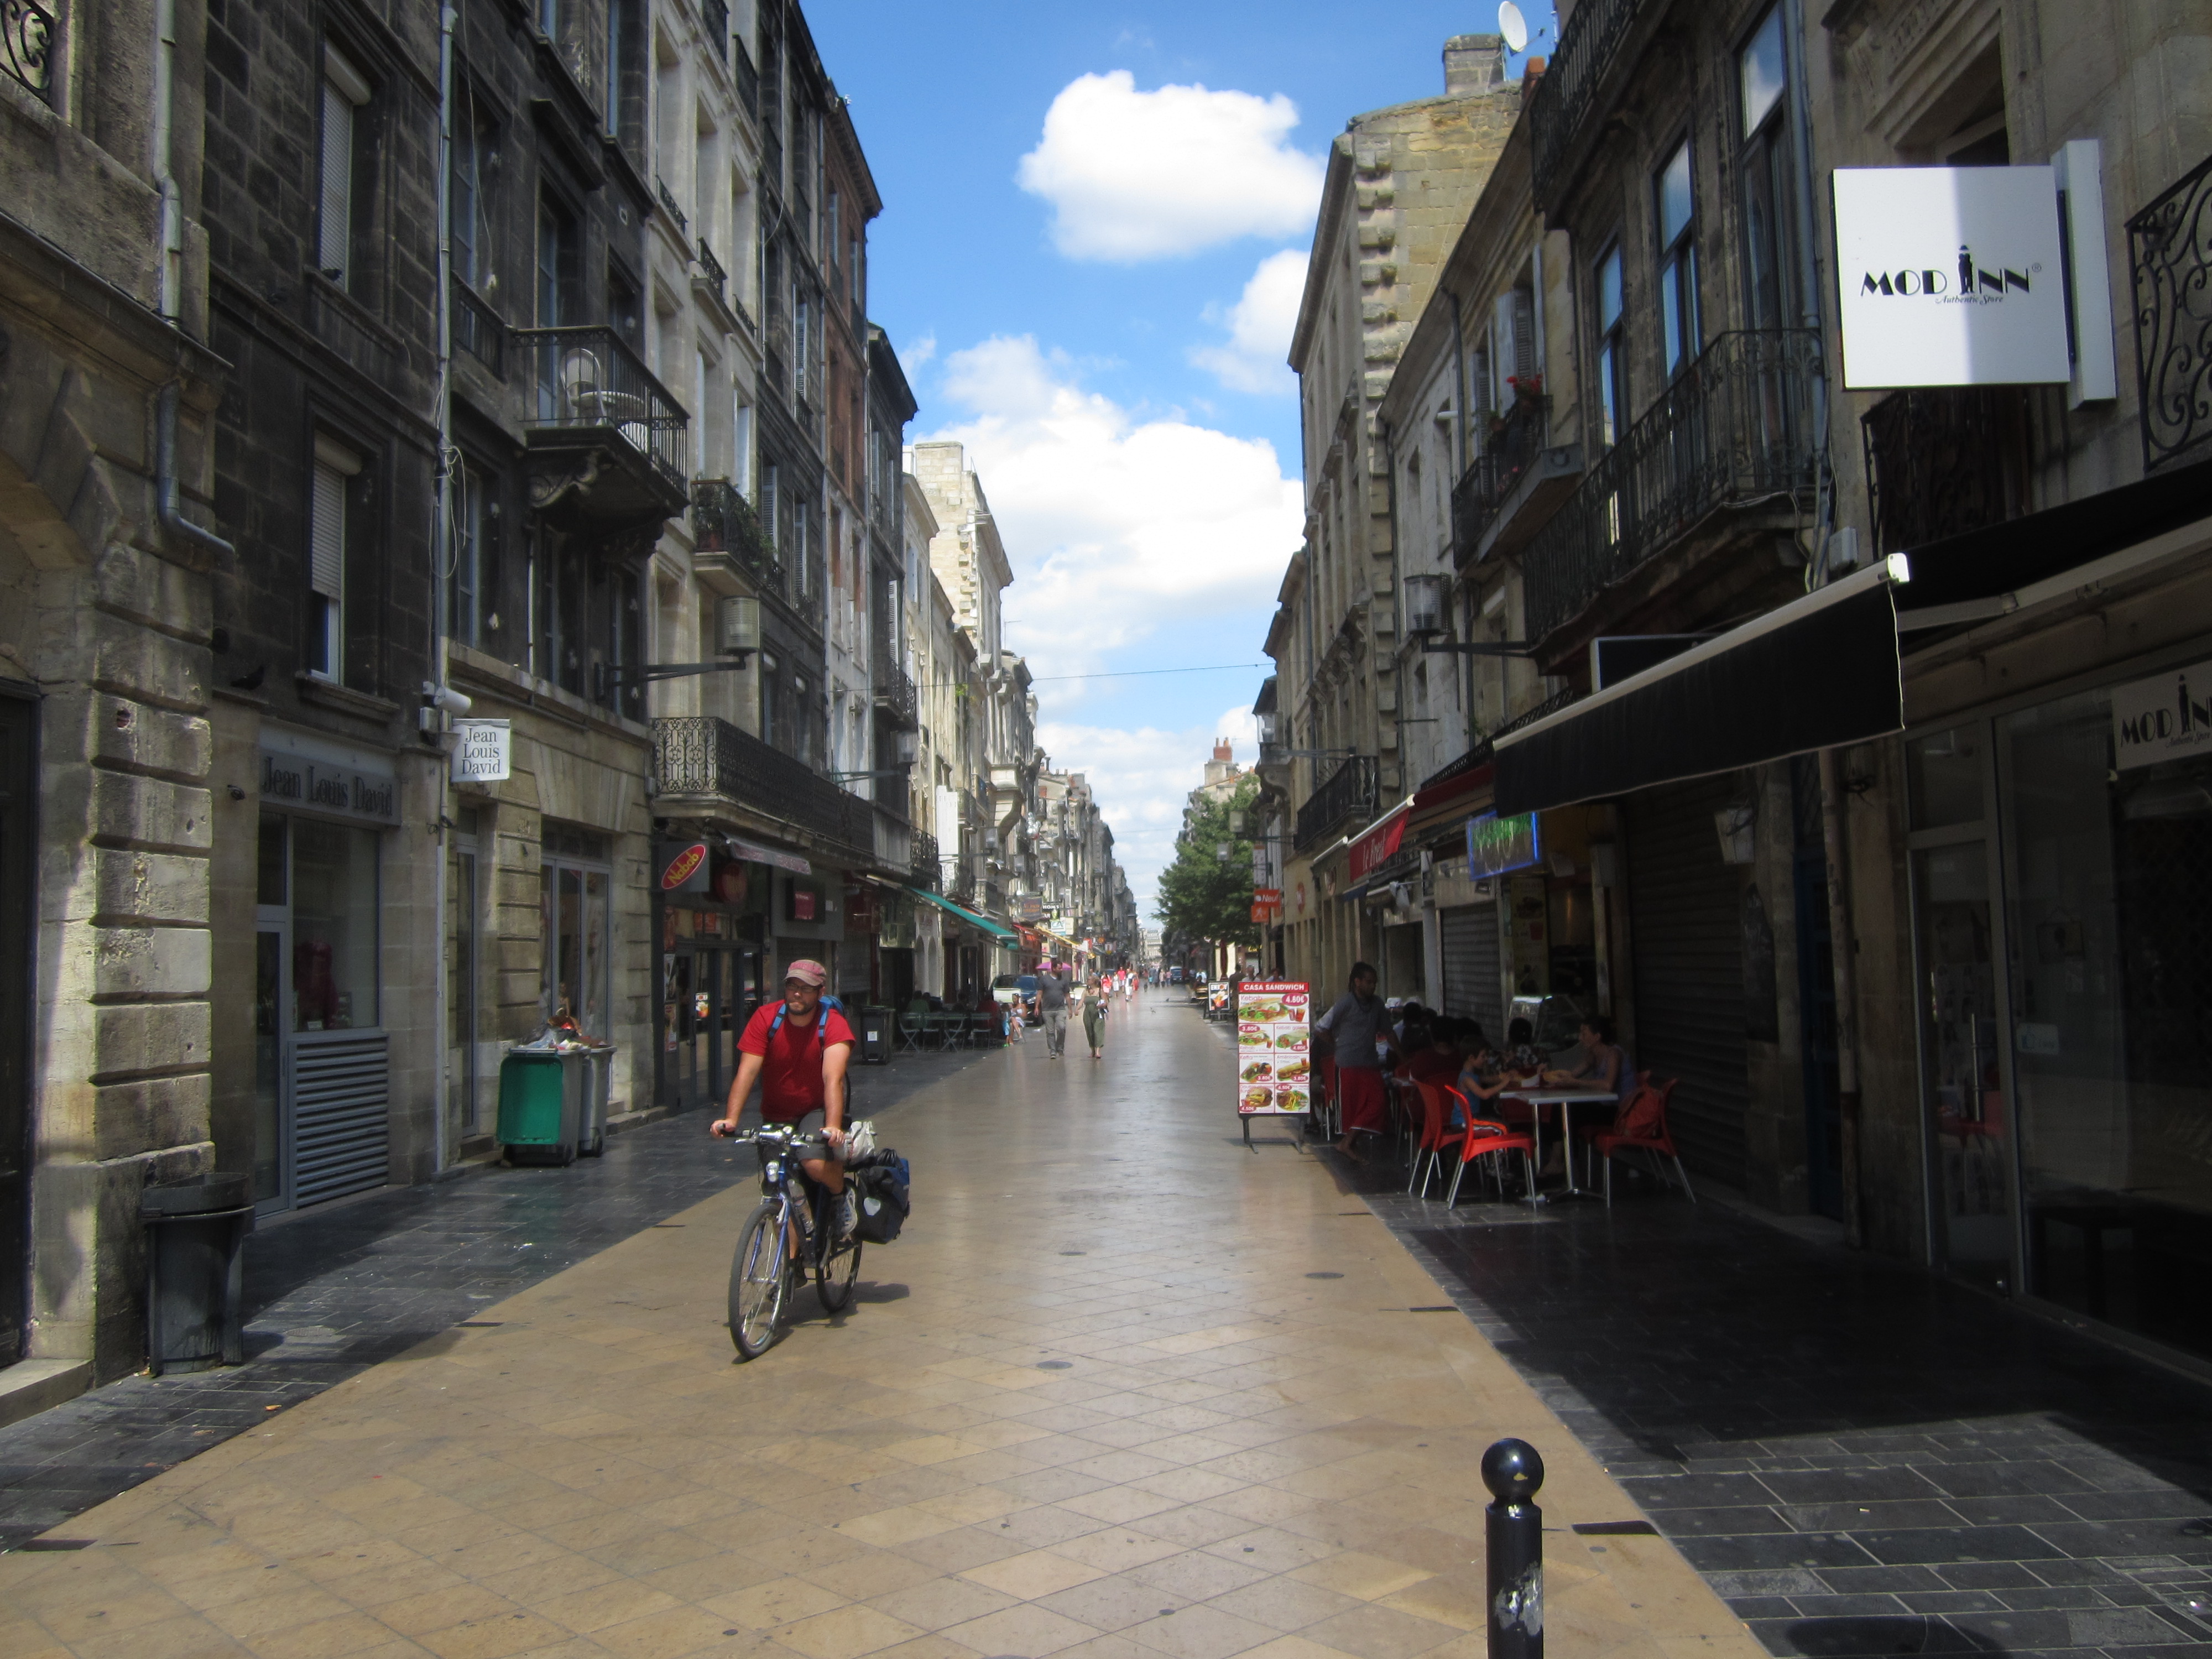 La rue St catherine